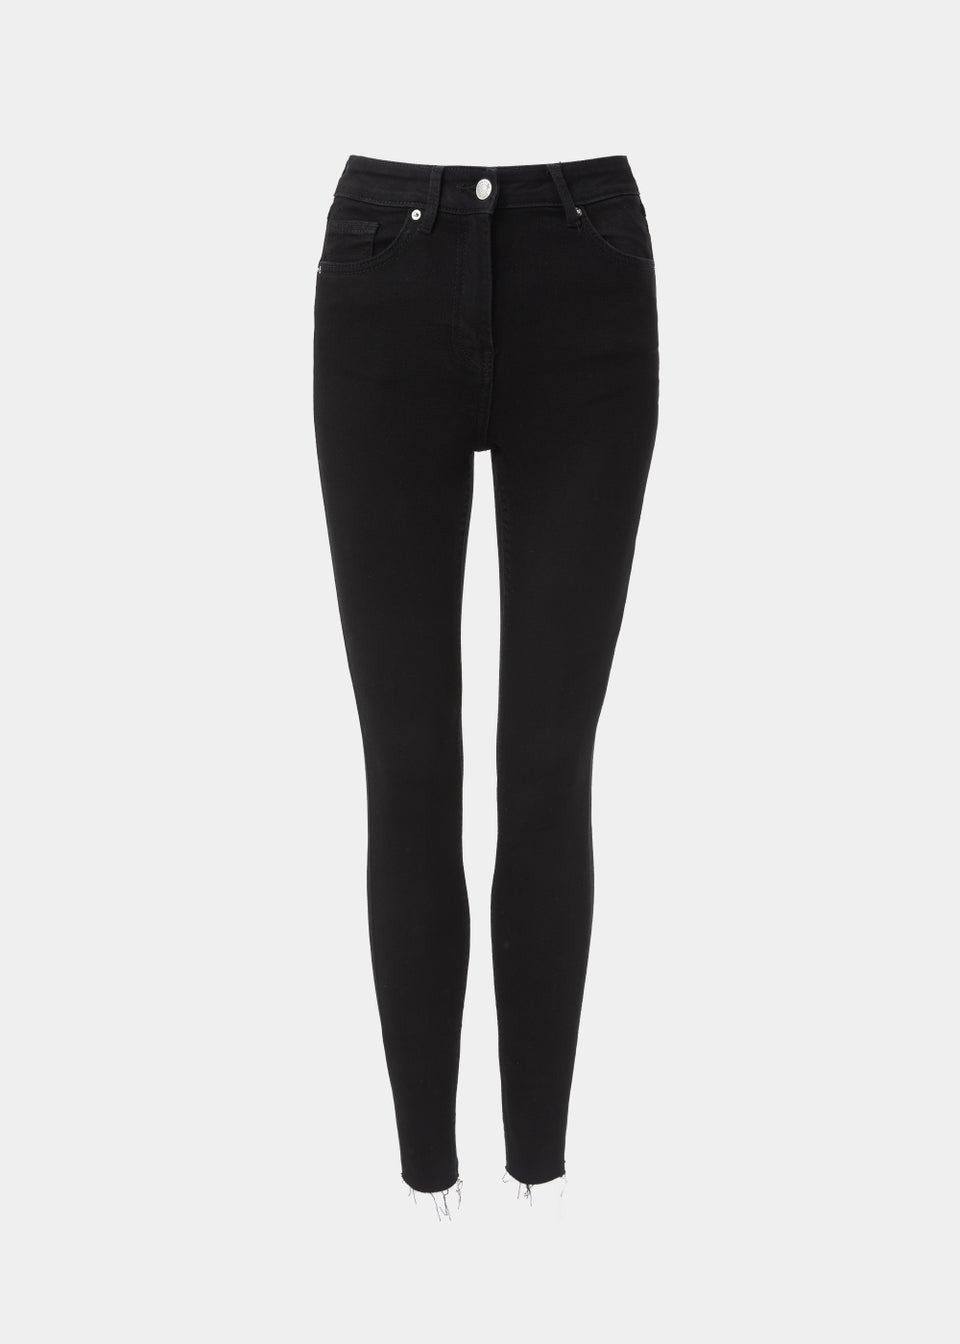 April Black Ankle Grazer Super Skinny Jeans (Long Length)